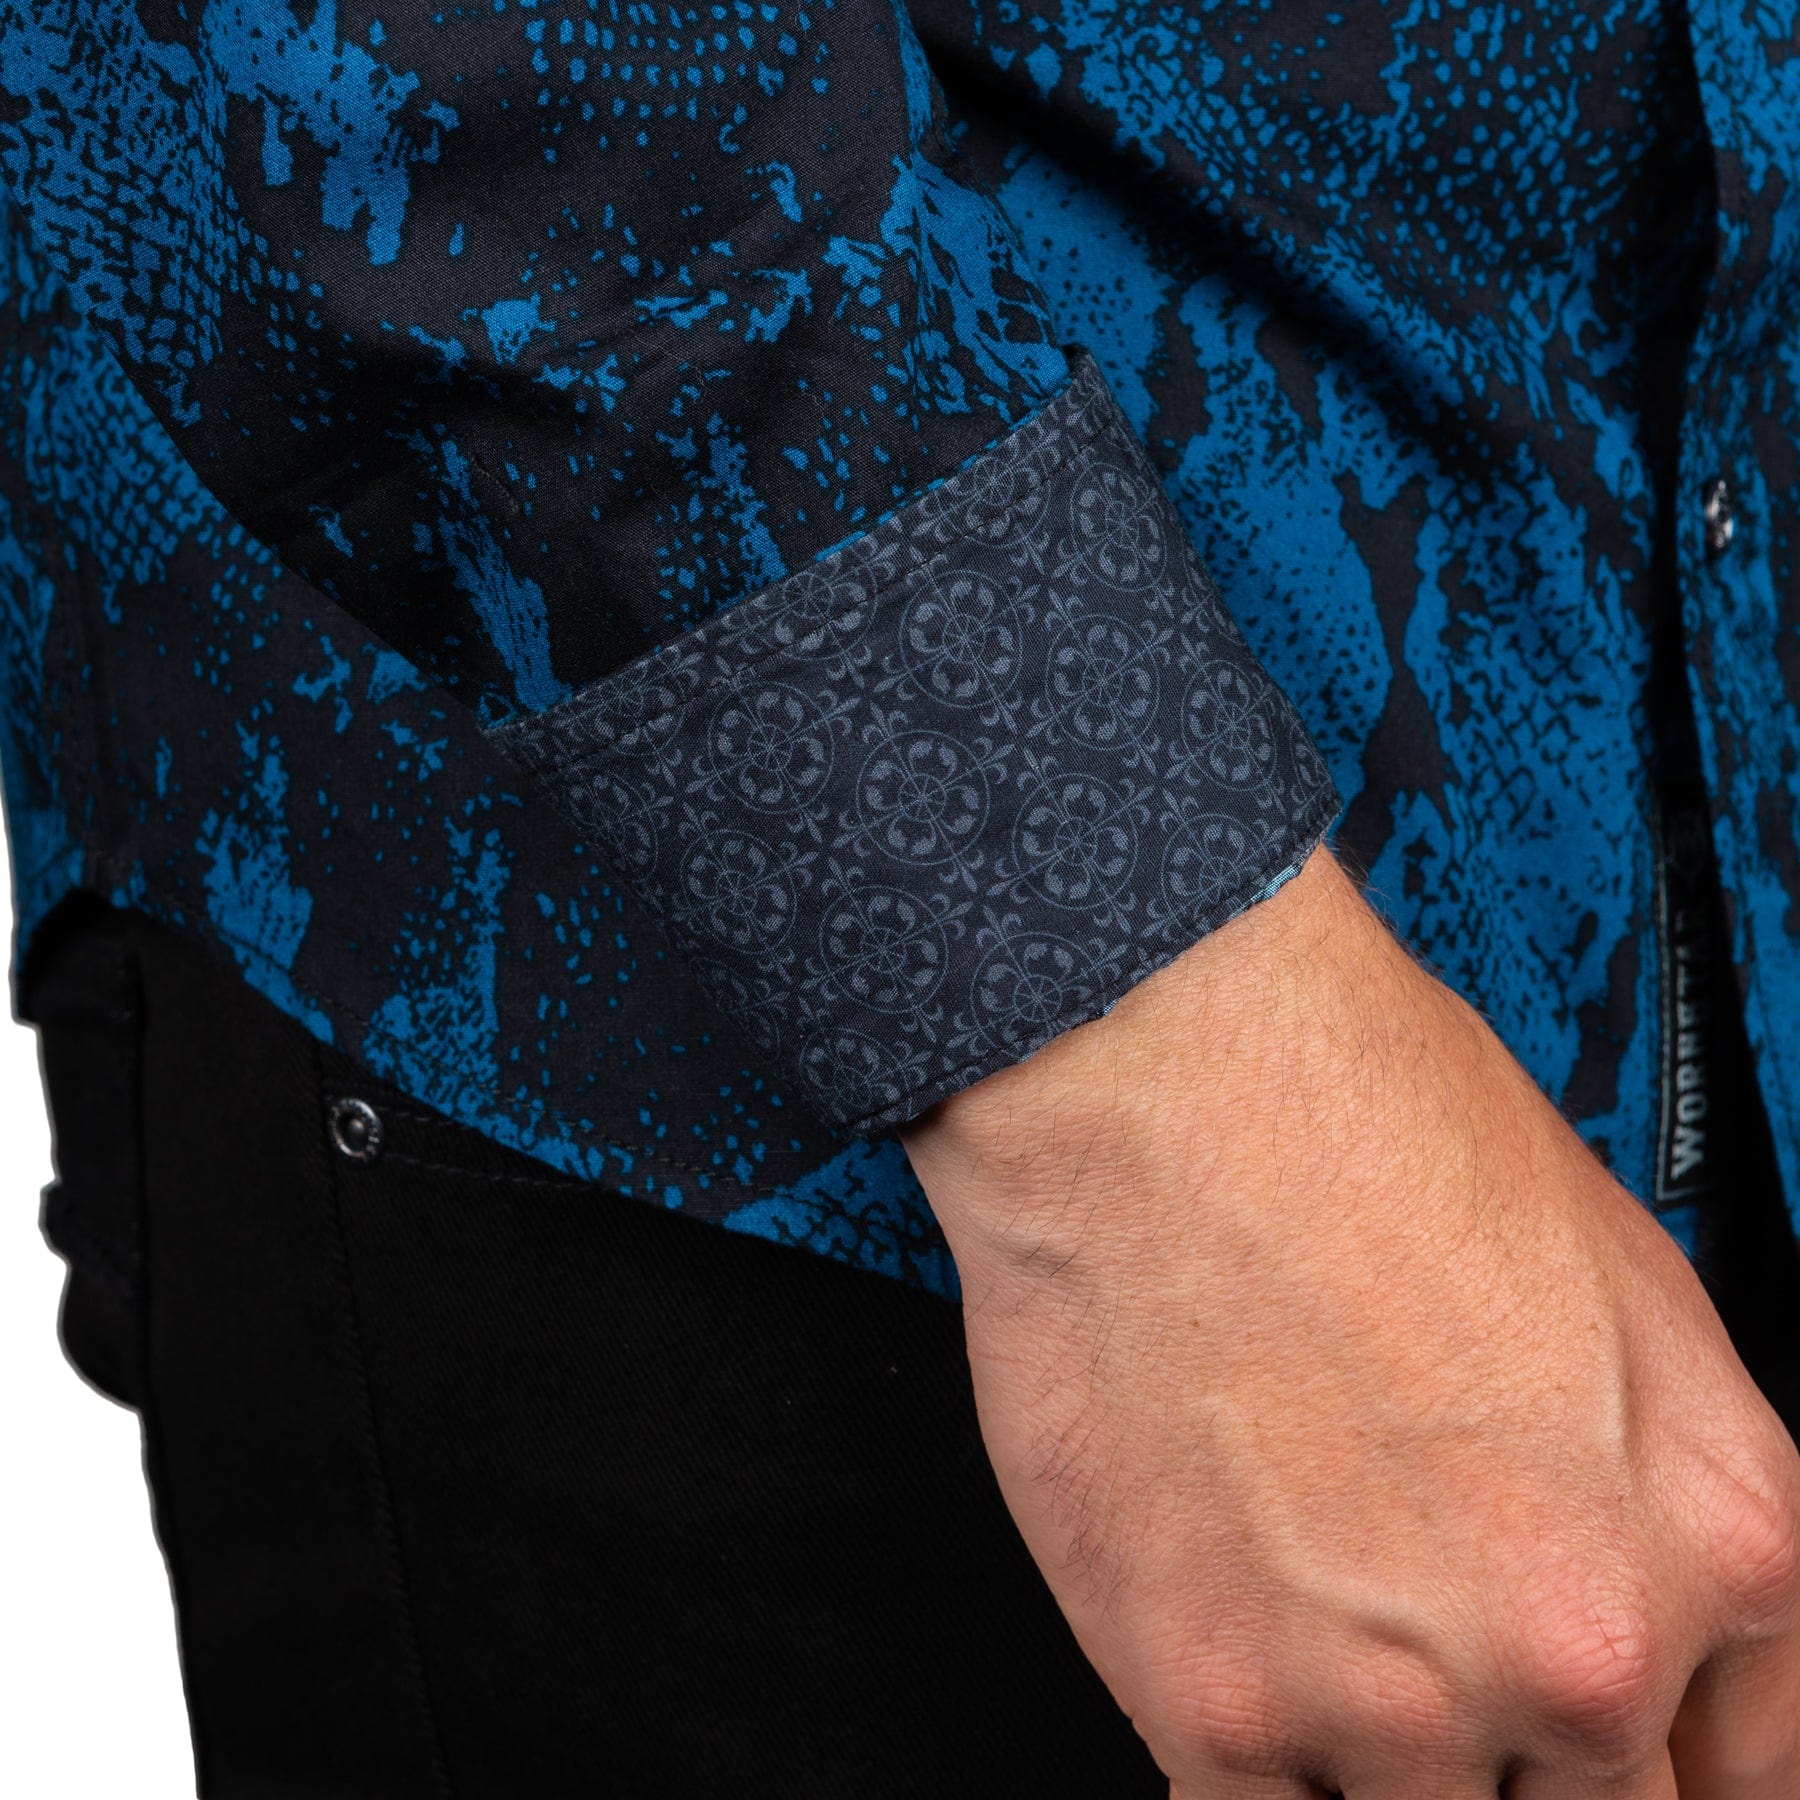 Wornstar Clothing Mens Long Sleeve Shirt. Blue Viper Button Down Shirt.